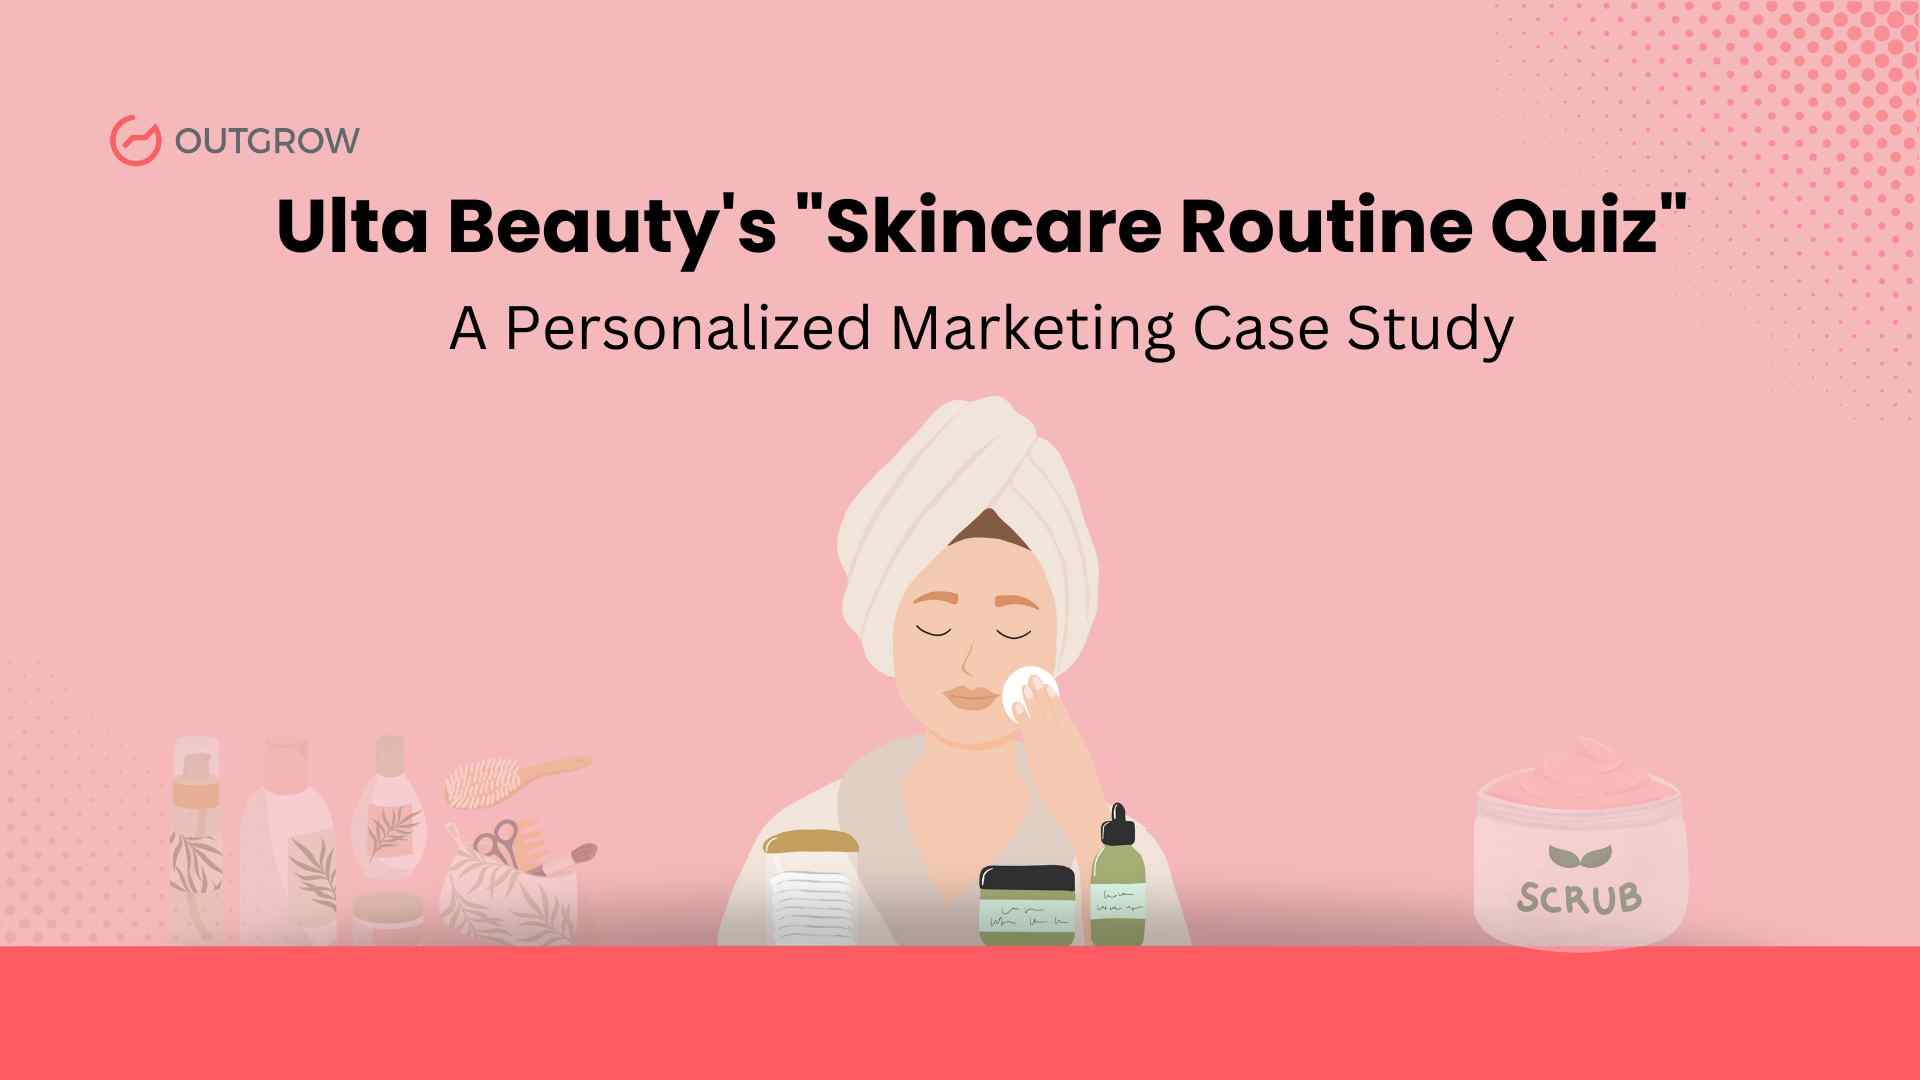 ATTACHMENT DETAILS Ulta-Beautys-Skincare-Routine-Quiz-A-Personalized-Marketing-Case-Study